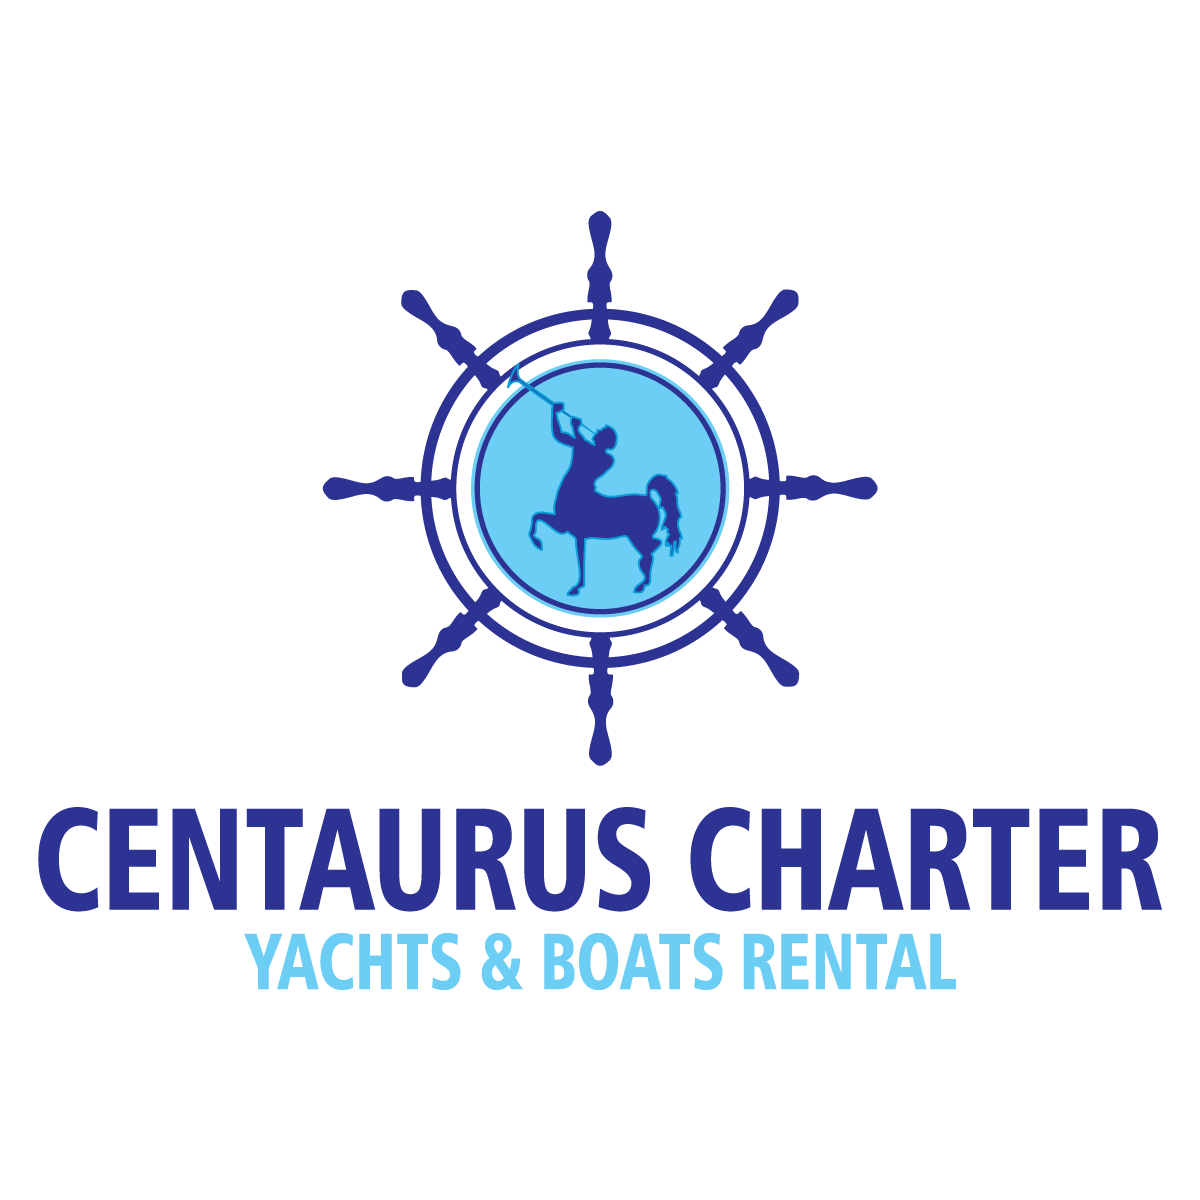 Centaurus Charter Yachts & Boat Rental